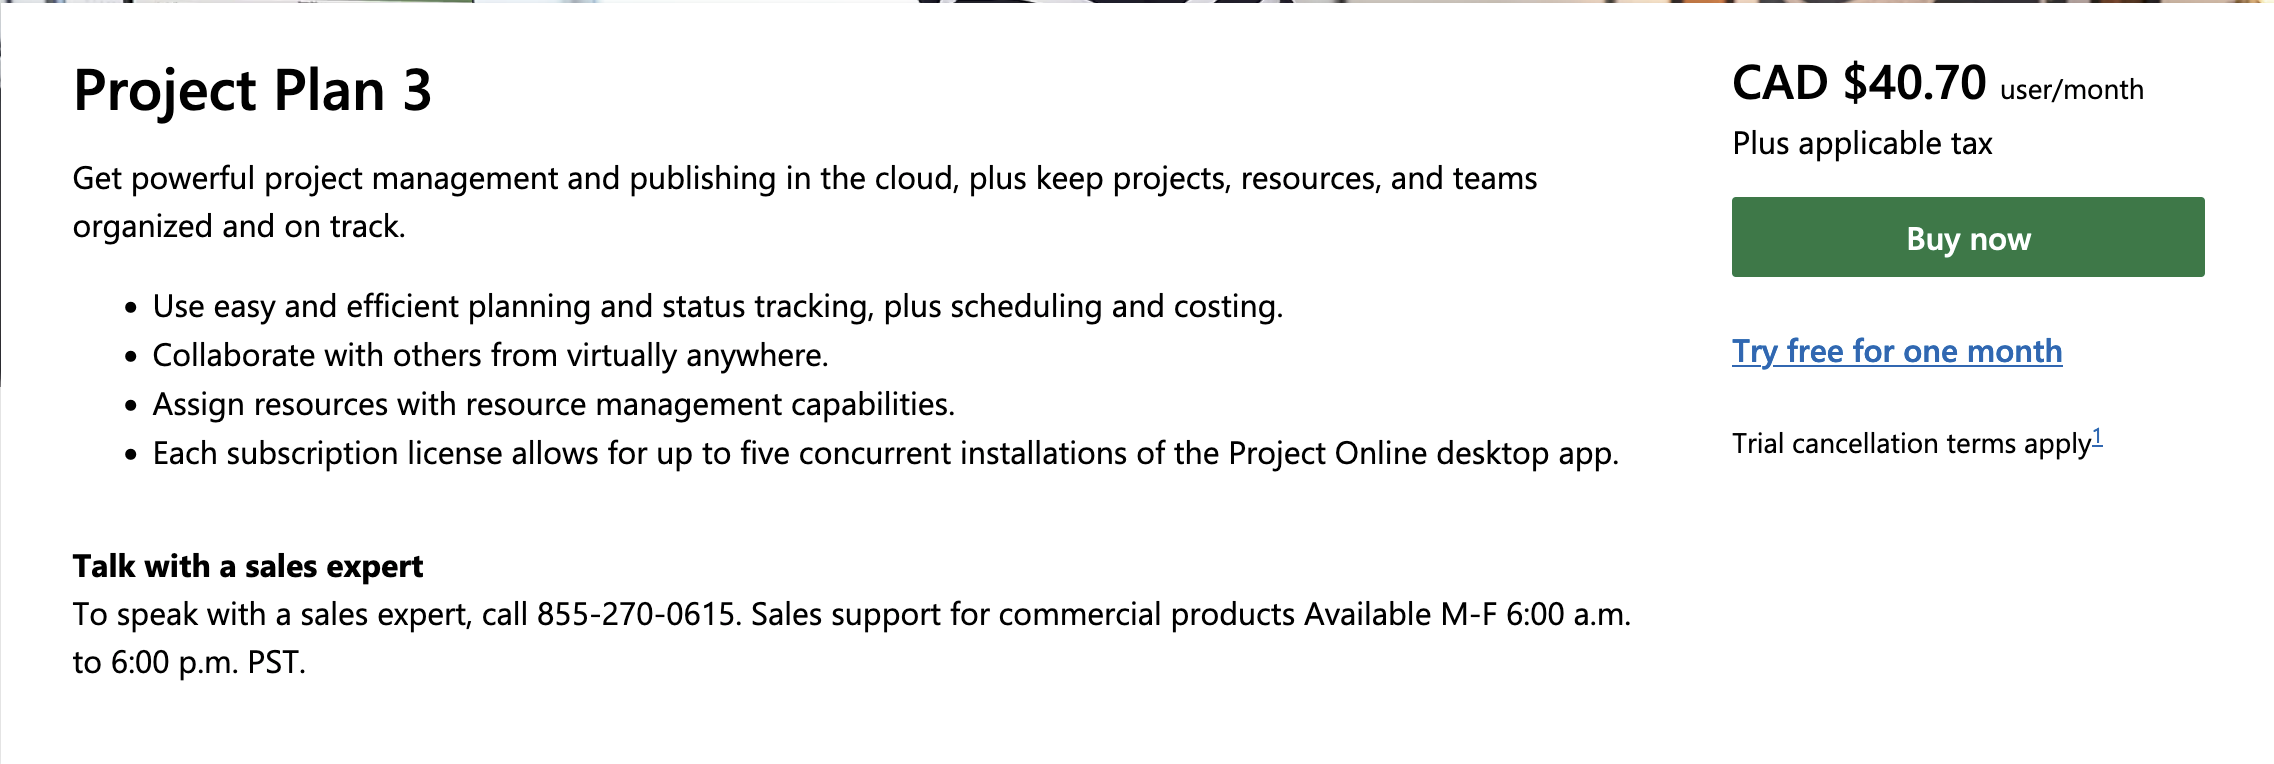 Microsoft Project Plan 3 Screenshot